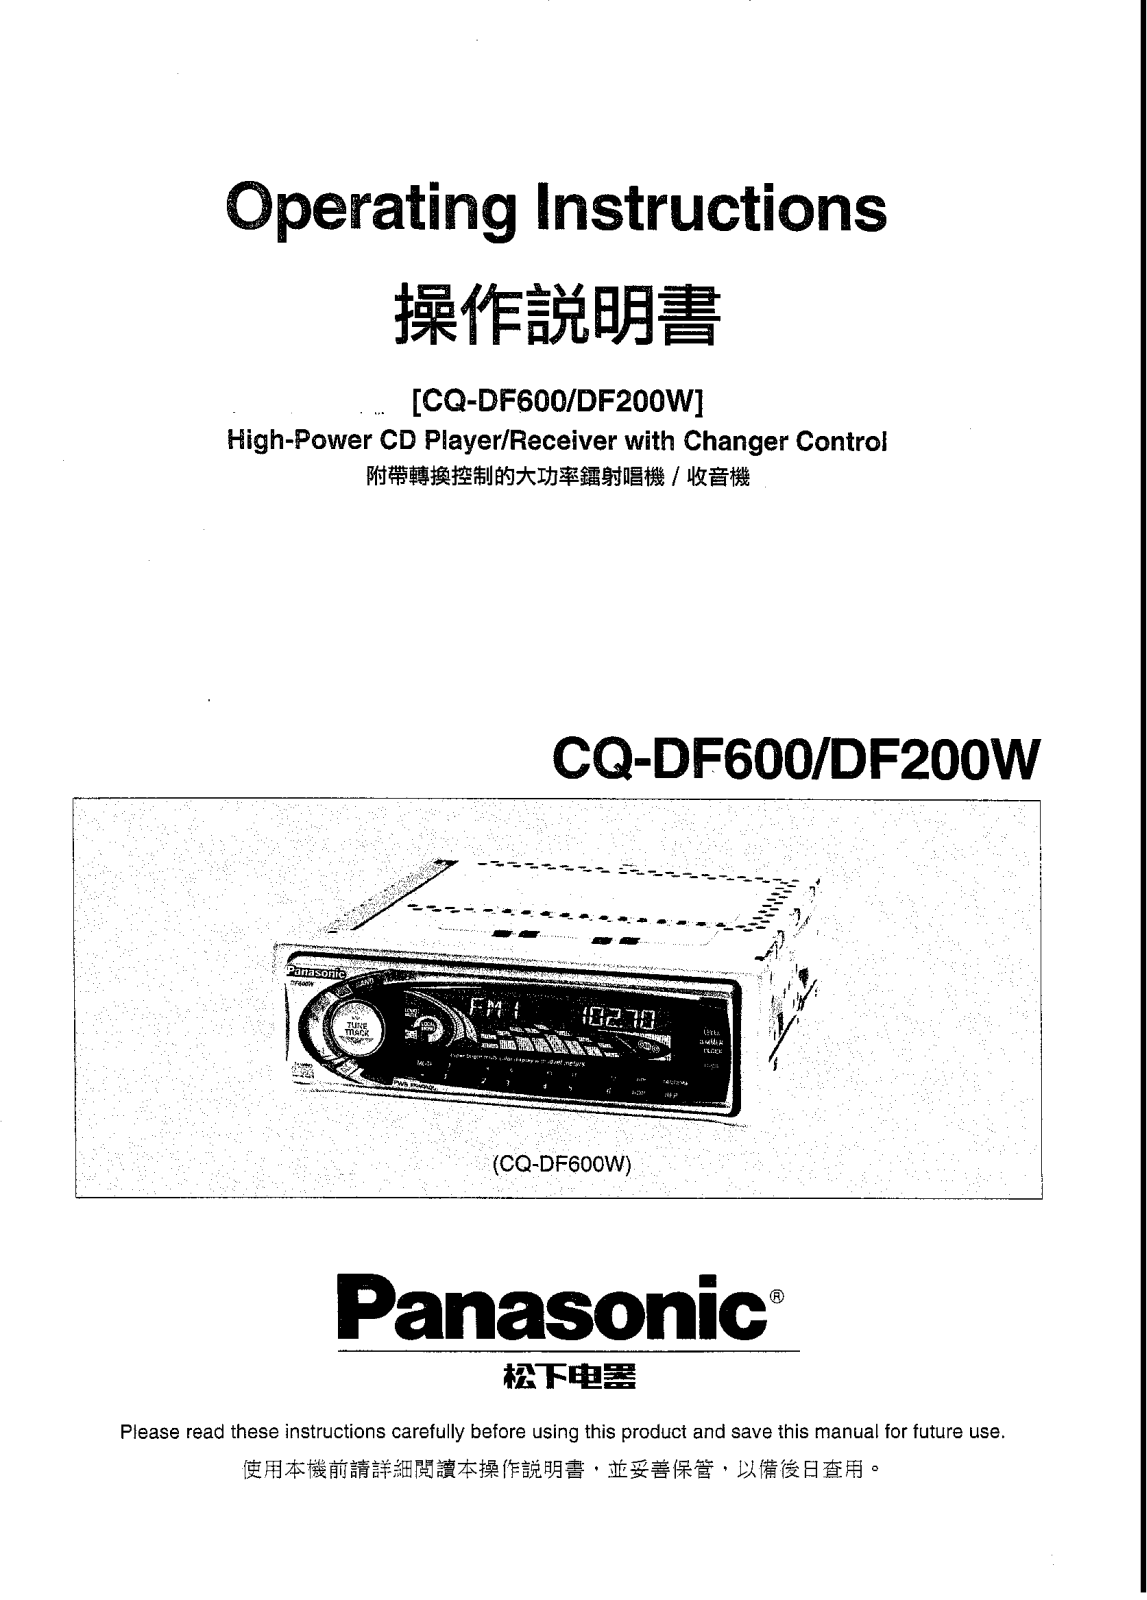 Panasonic CQ-DF600, CQ-DF200W Operating Instructions